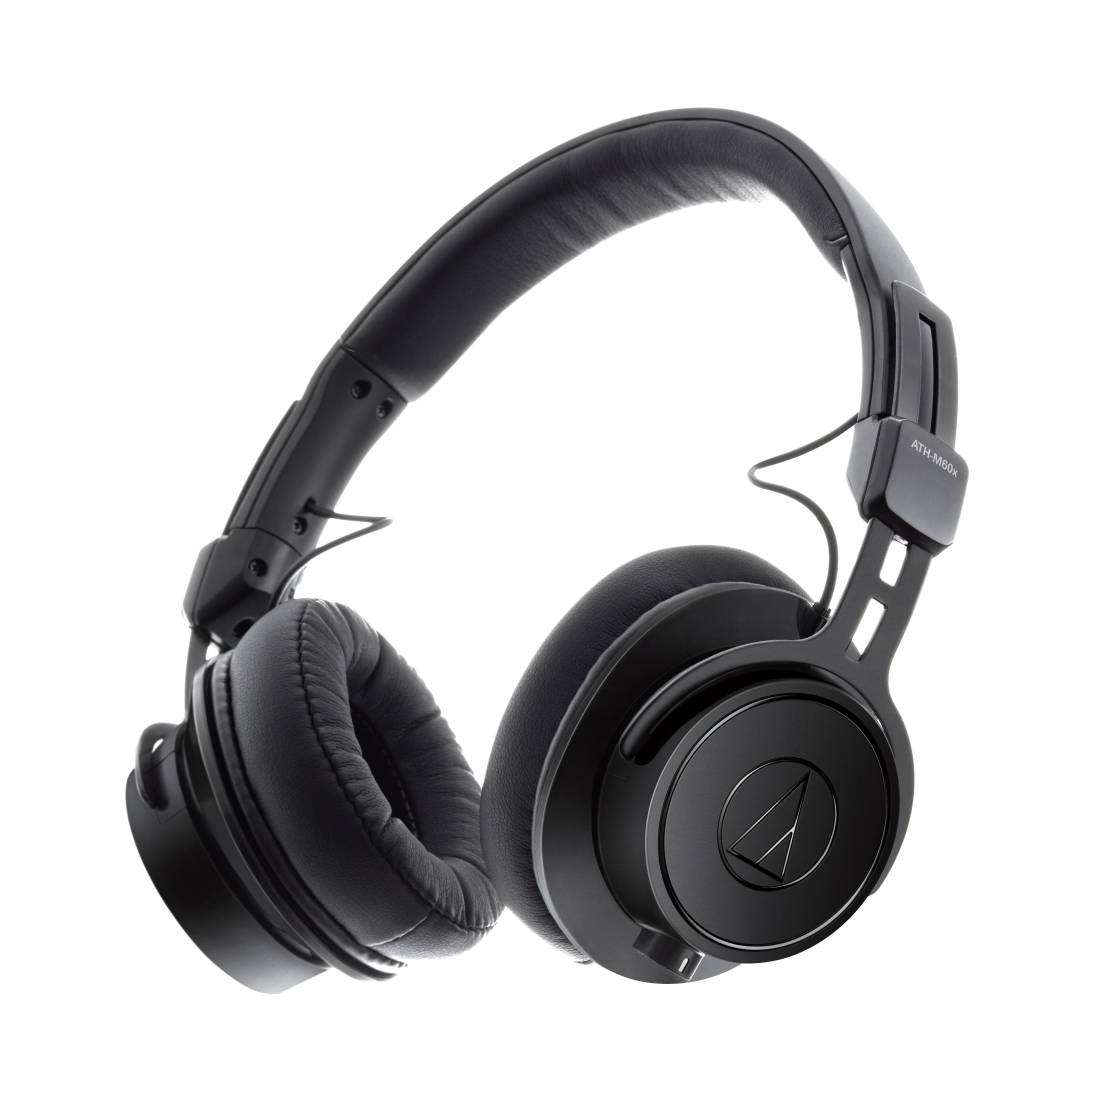 ATH-M60x Professional Monitor Headphones